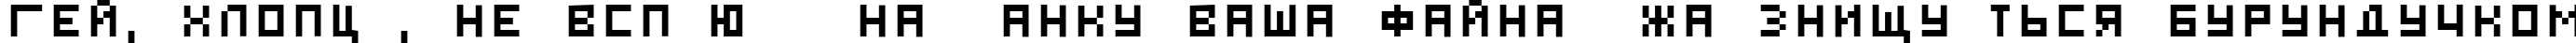 Пример написания шрифтом AuX DotBitC SmallCaps текста на украинском